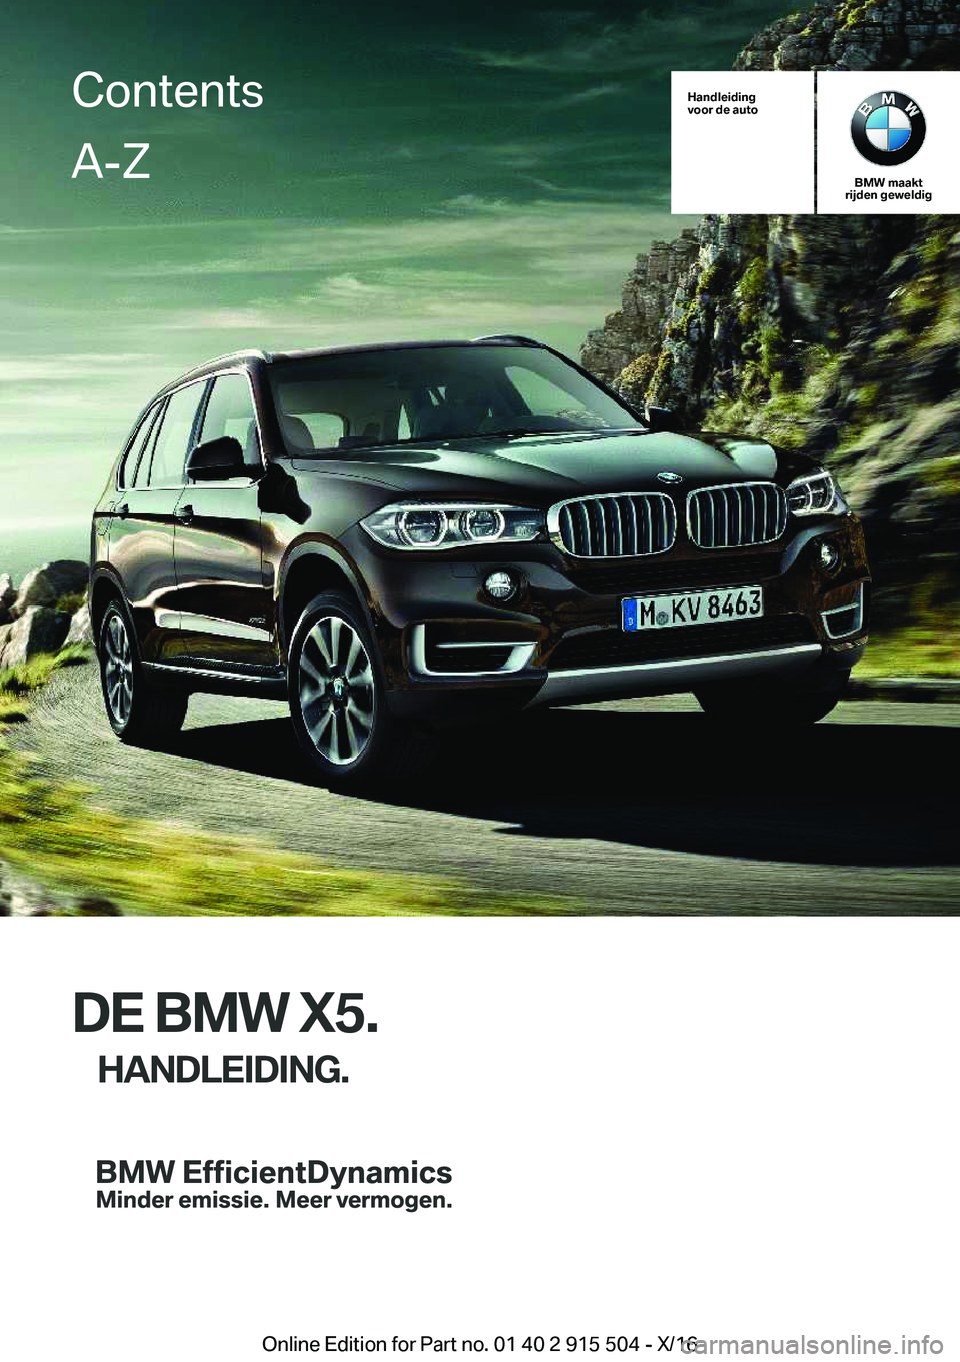 BMW X5 2017  Instructieboekjes (in Dutch) �H�a�n�d�l�e�i�d�i�n�g
�v�o�o�r��d�e��a�u�t�o
�B�M�W��m�a�a�k�t
�r�i�j�d�e�n��g�e�w�e�l�d�i�g
�D�E��B�M�W��X�5�.
�H�A�N�D�L�E�I�D�I�N�G�.
�C�o�n�t�e�n�t�s�A�-�Z
�O�n�l�i�n�e� �E�d�i�t�i�o�n� �f�